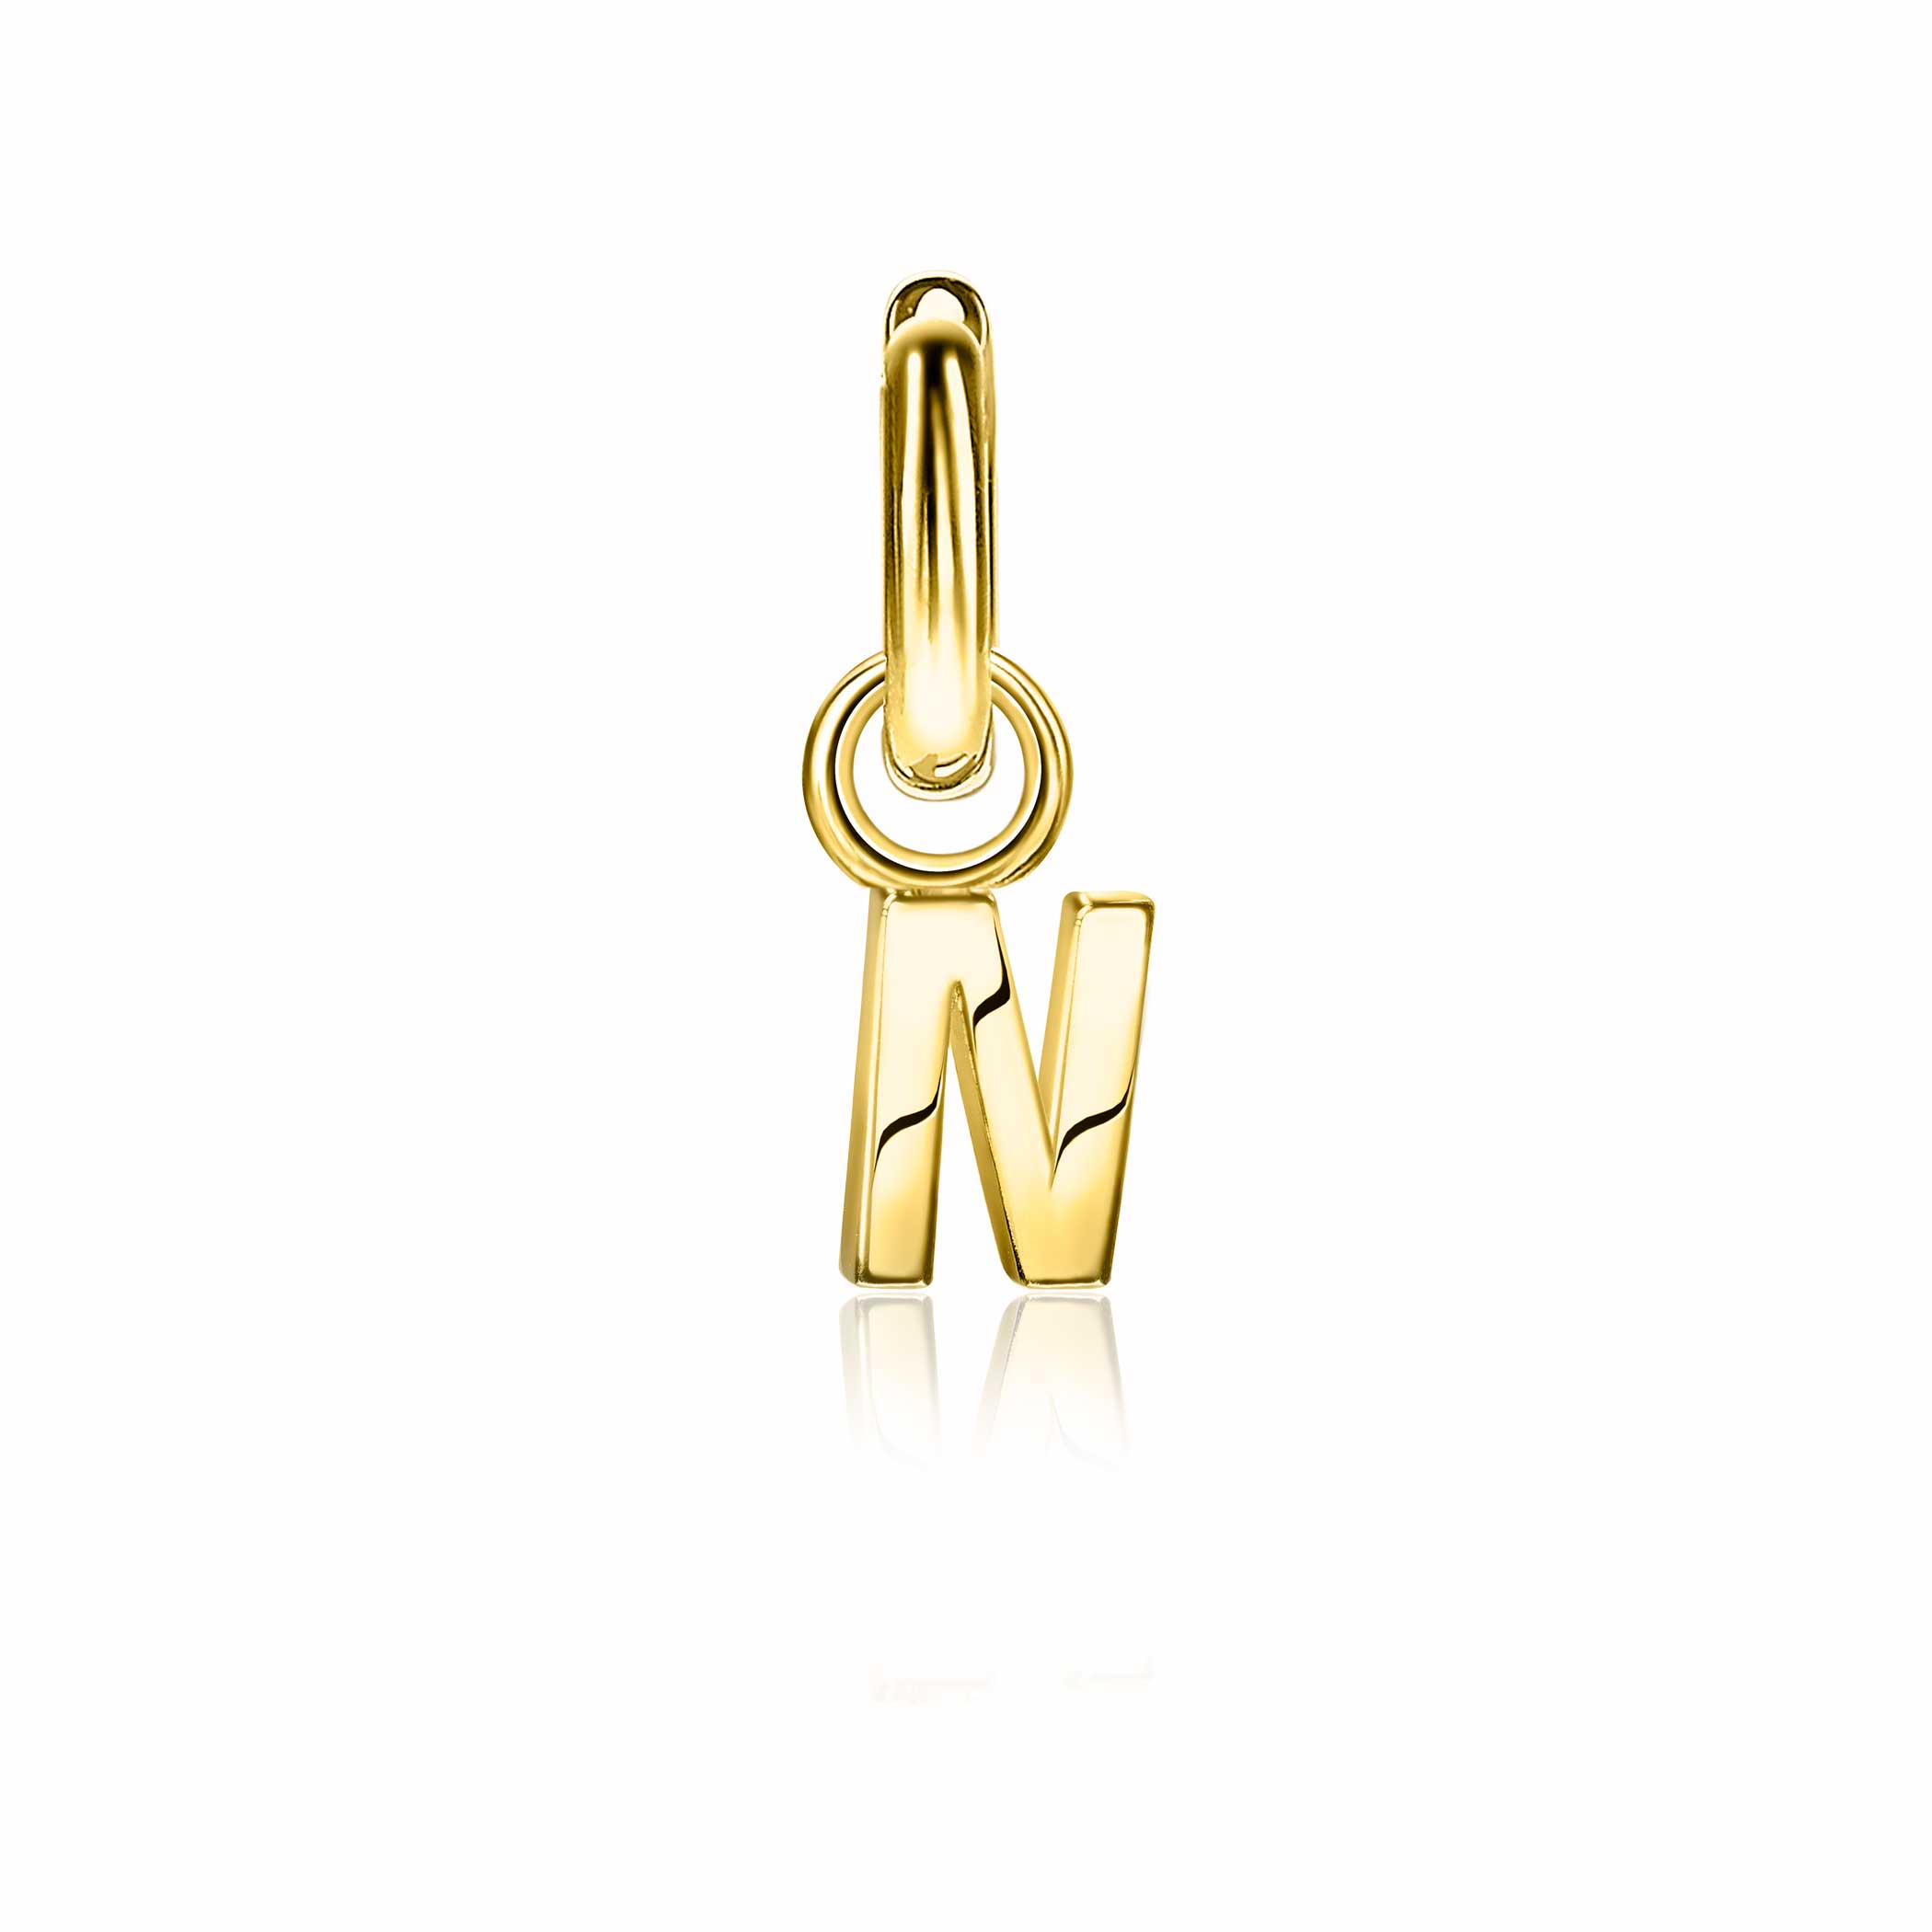 ZINZI Gold Plated Letter Earrings Pendant N price per piece ZICH2145N (excl. hoop earrings)